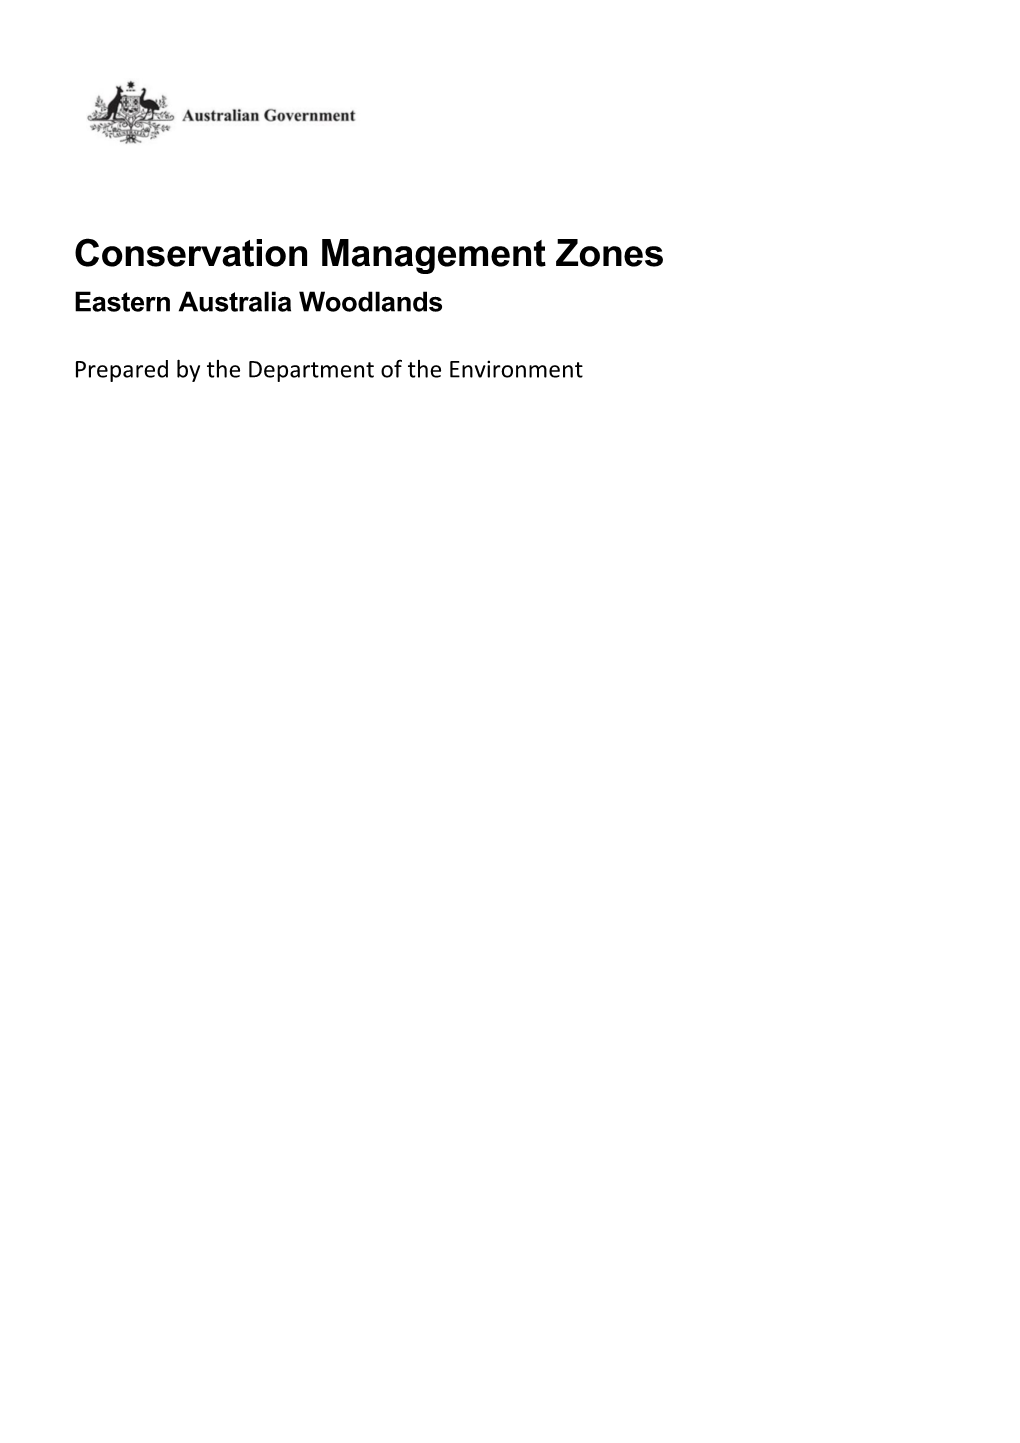 Conservation Management Zones of Australia: Eastern Australia Woodlands